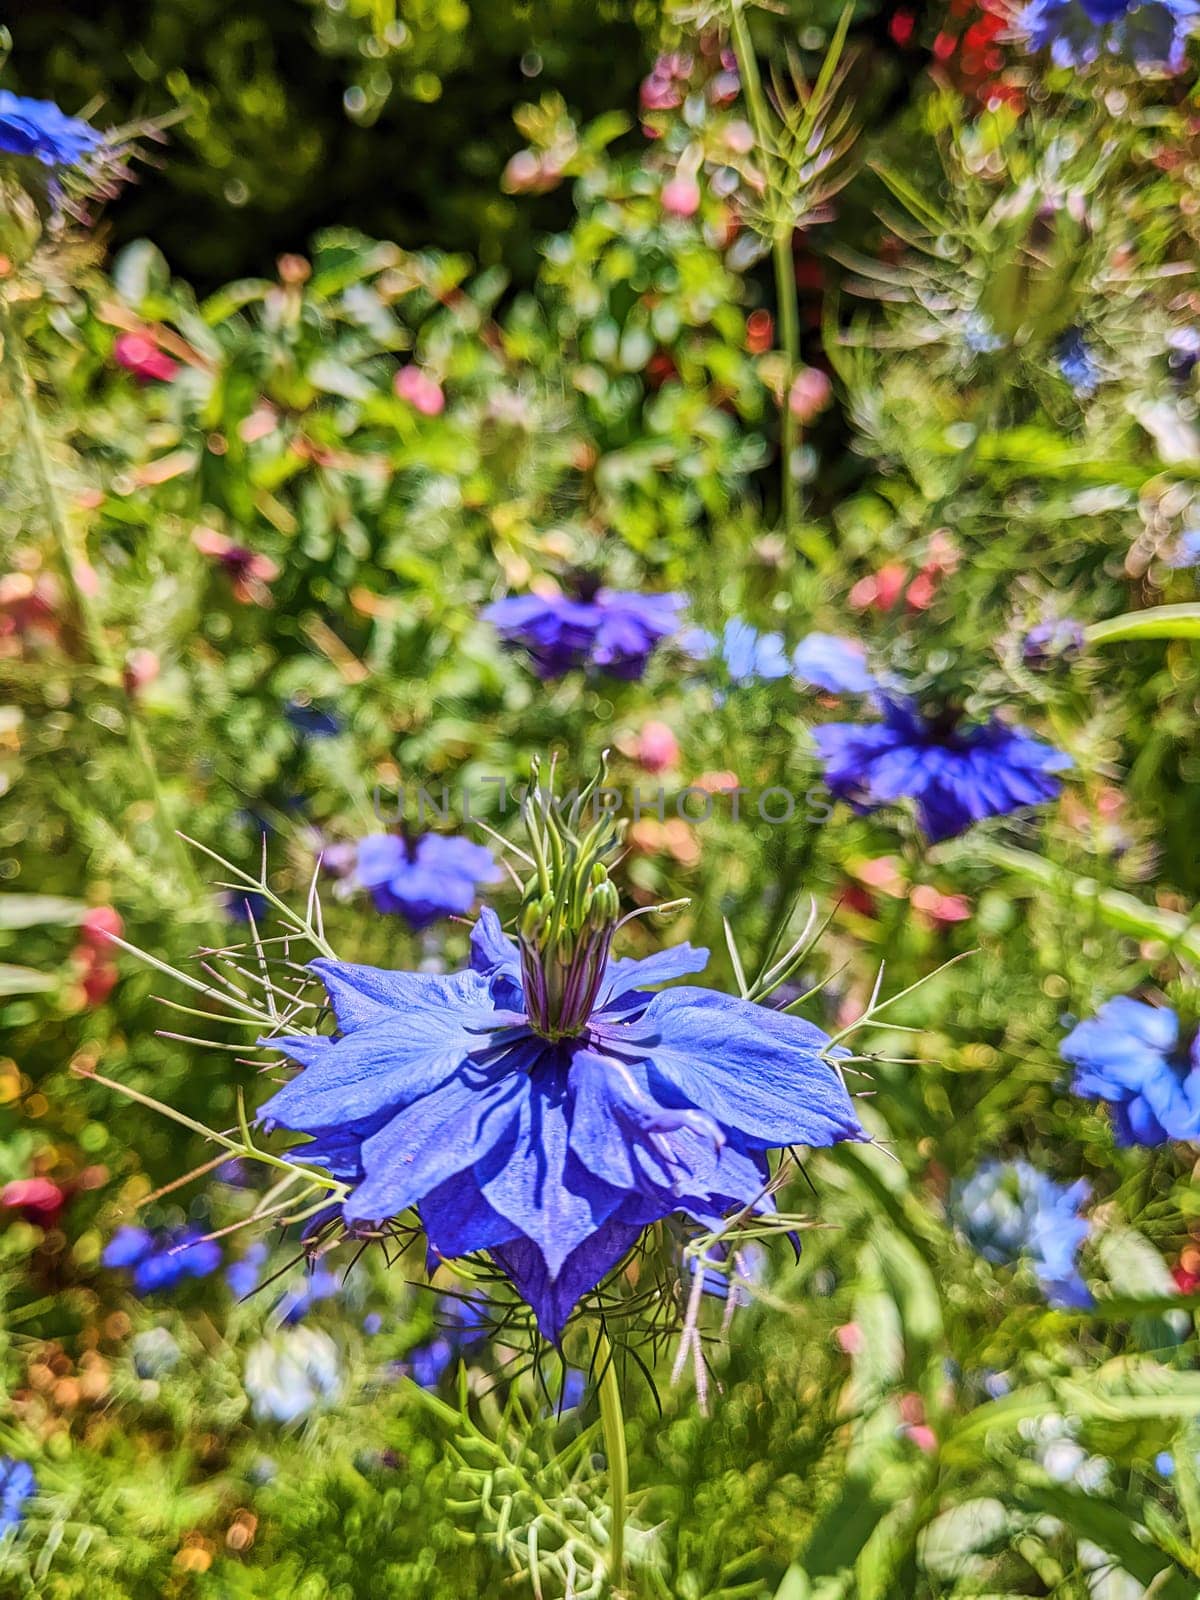 Vibrant Close-Up of a Blue Flower in a Lush California Garden, Oakland 2023